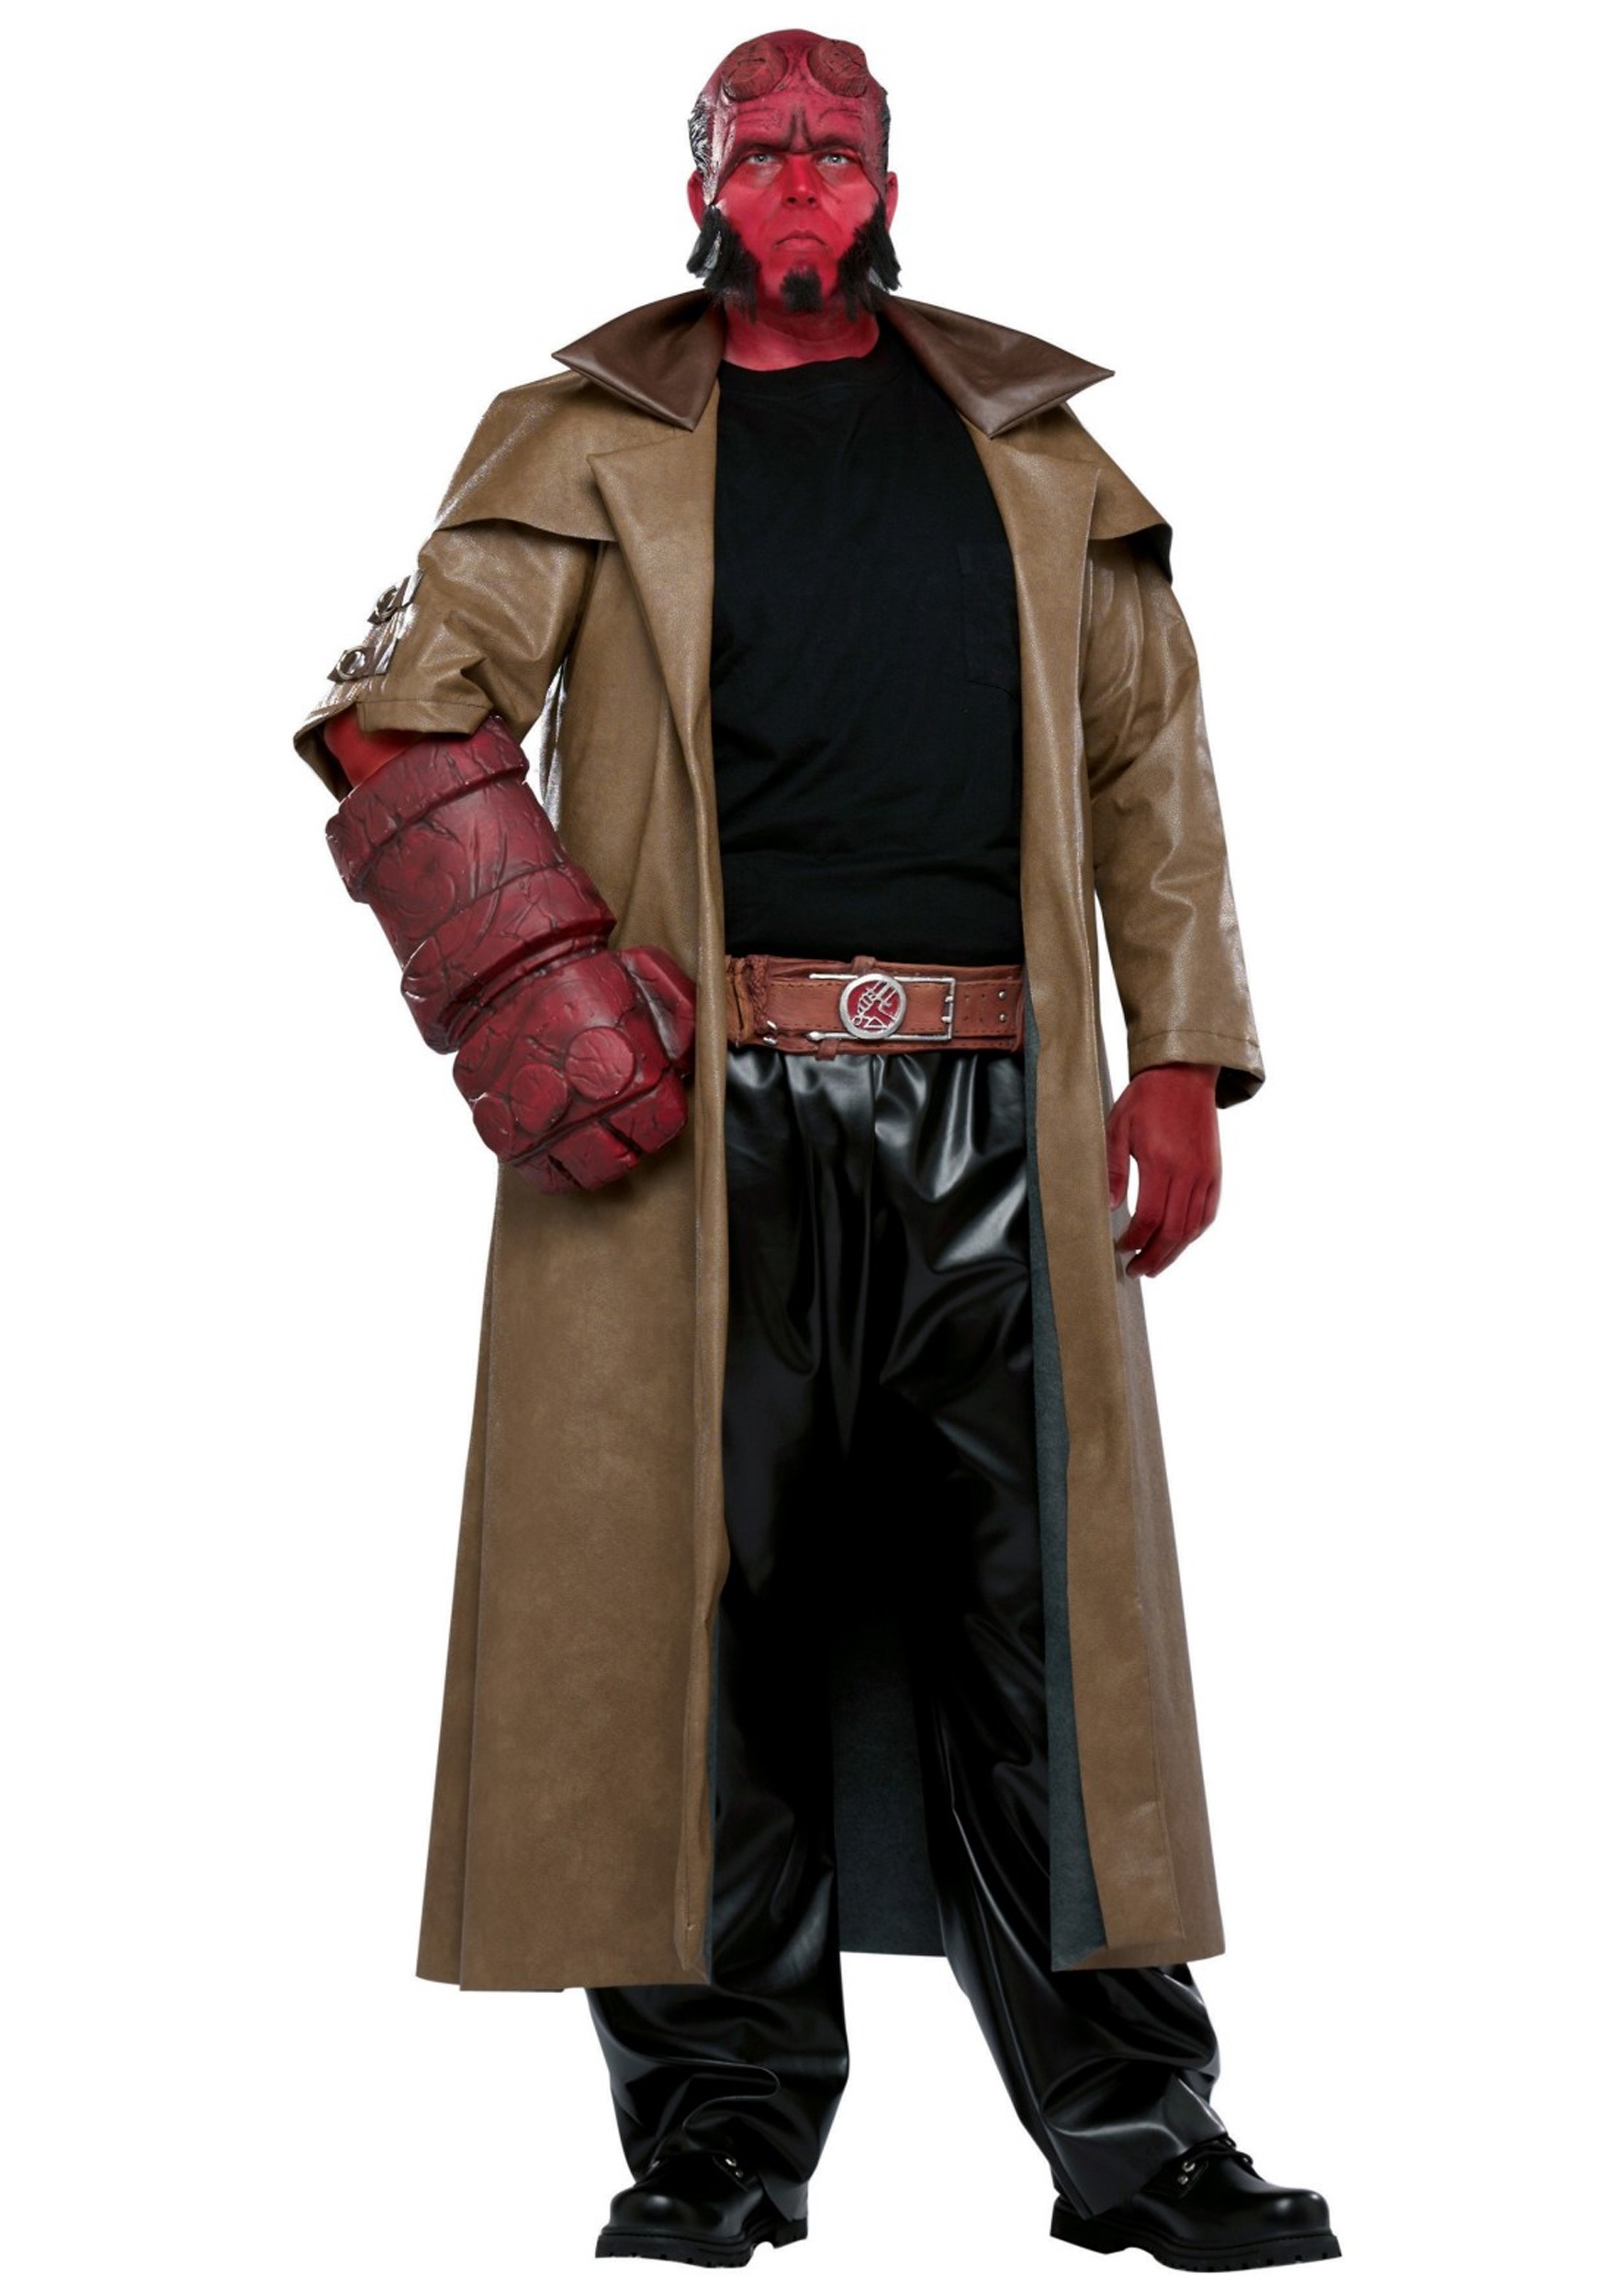 Plus Size Hellboy Costume - Halloween Costume Ideas 2021